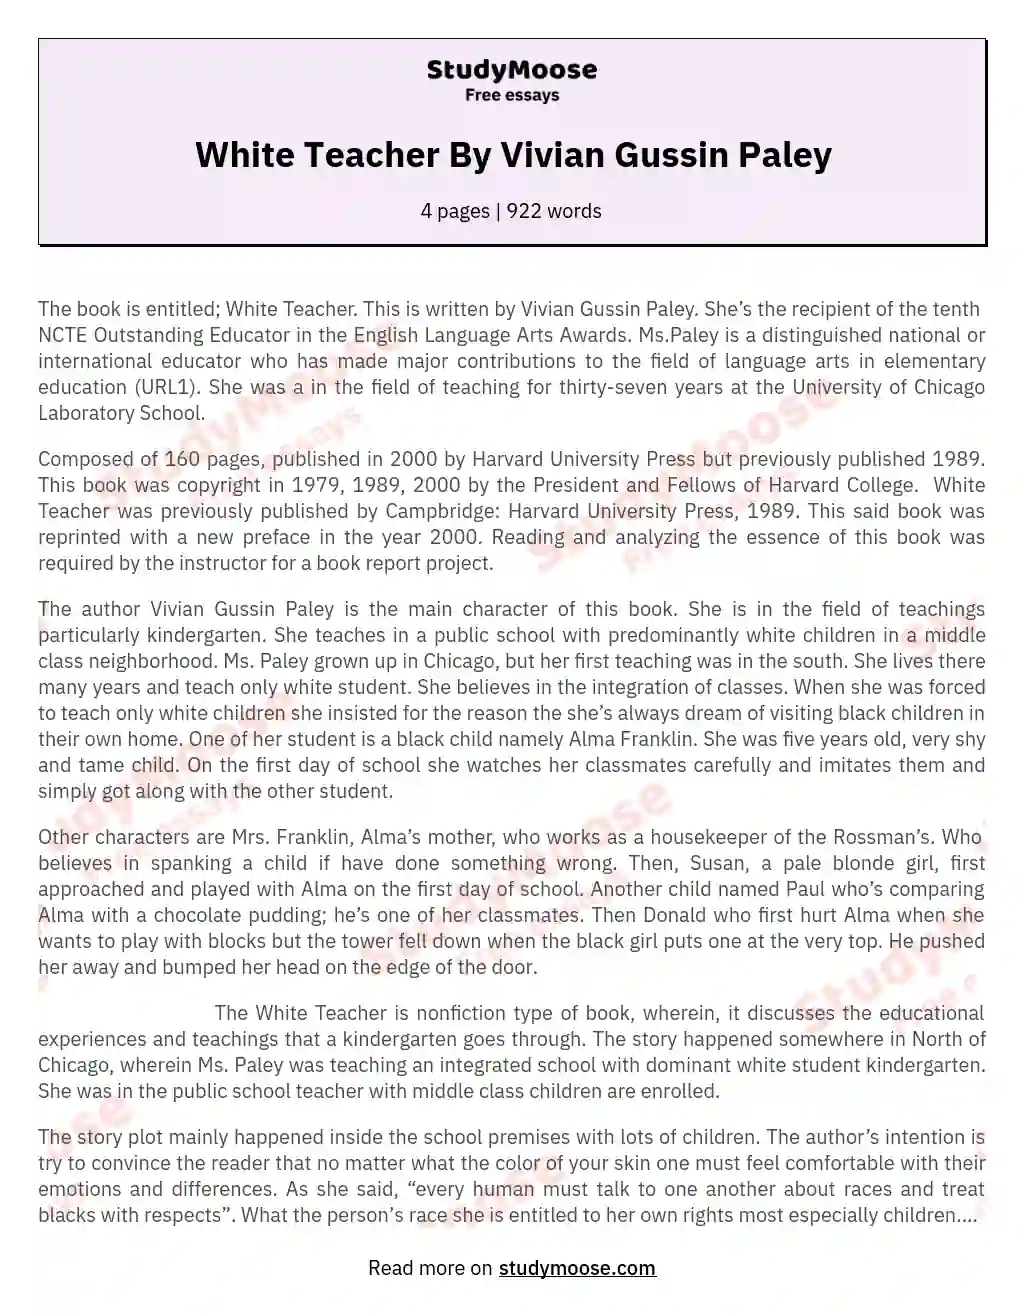 White Teacher By Vivian Gussin Paley essay